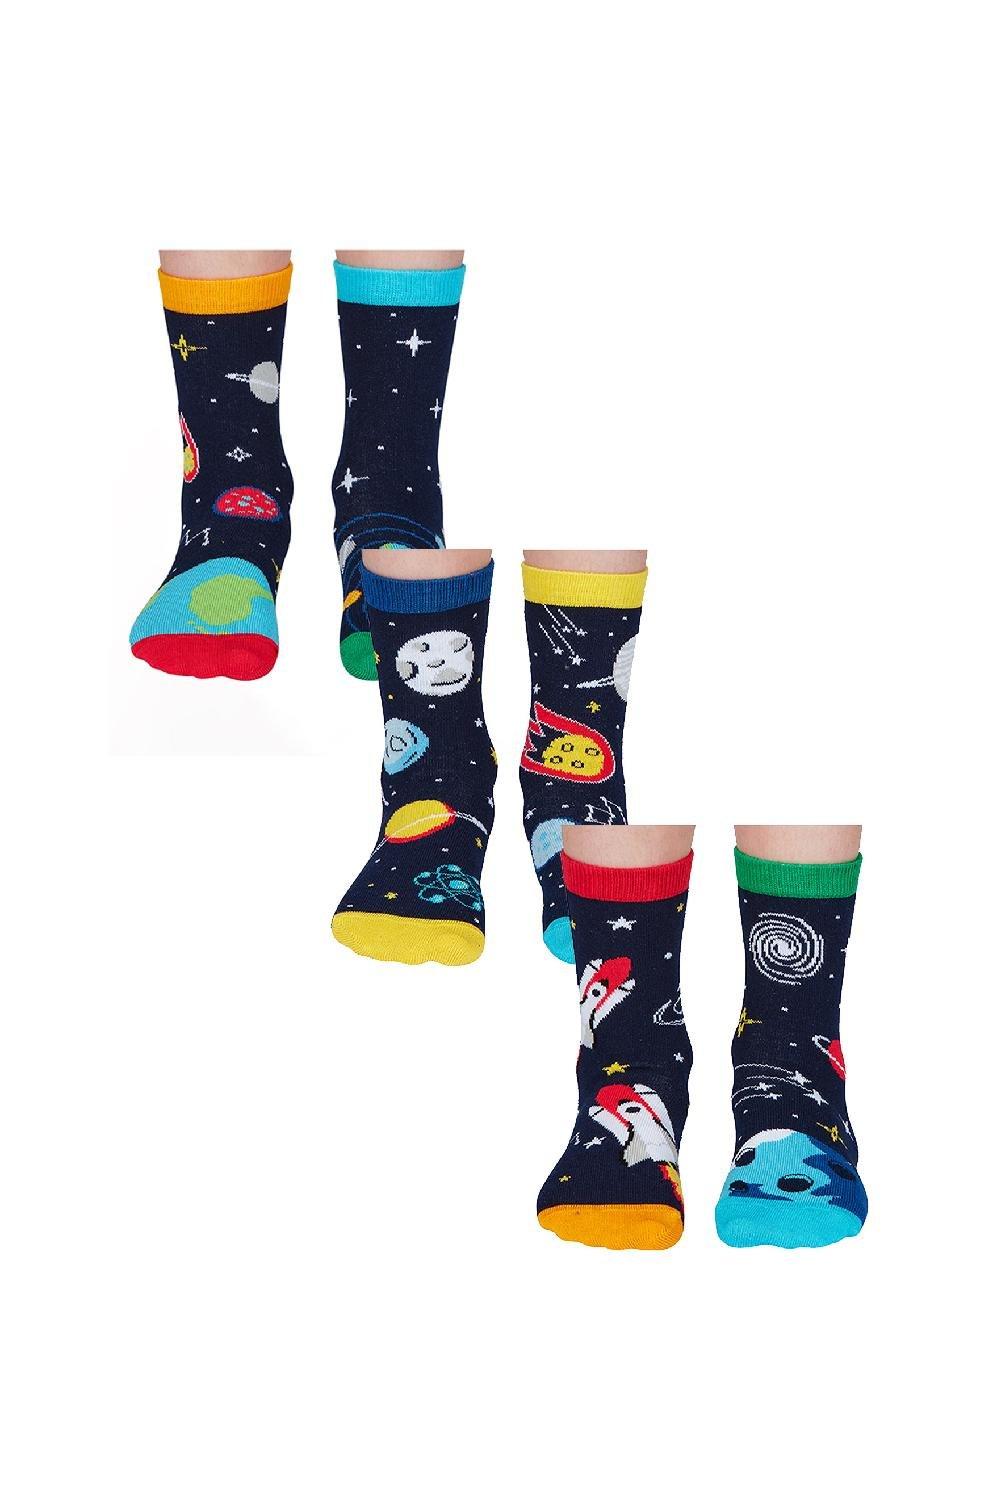 6 Pack Cosmic Space Novelty Cotton Odd Socks in Gift Box